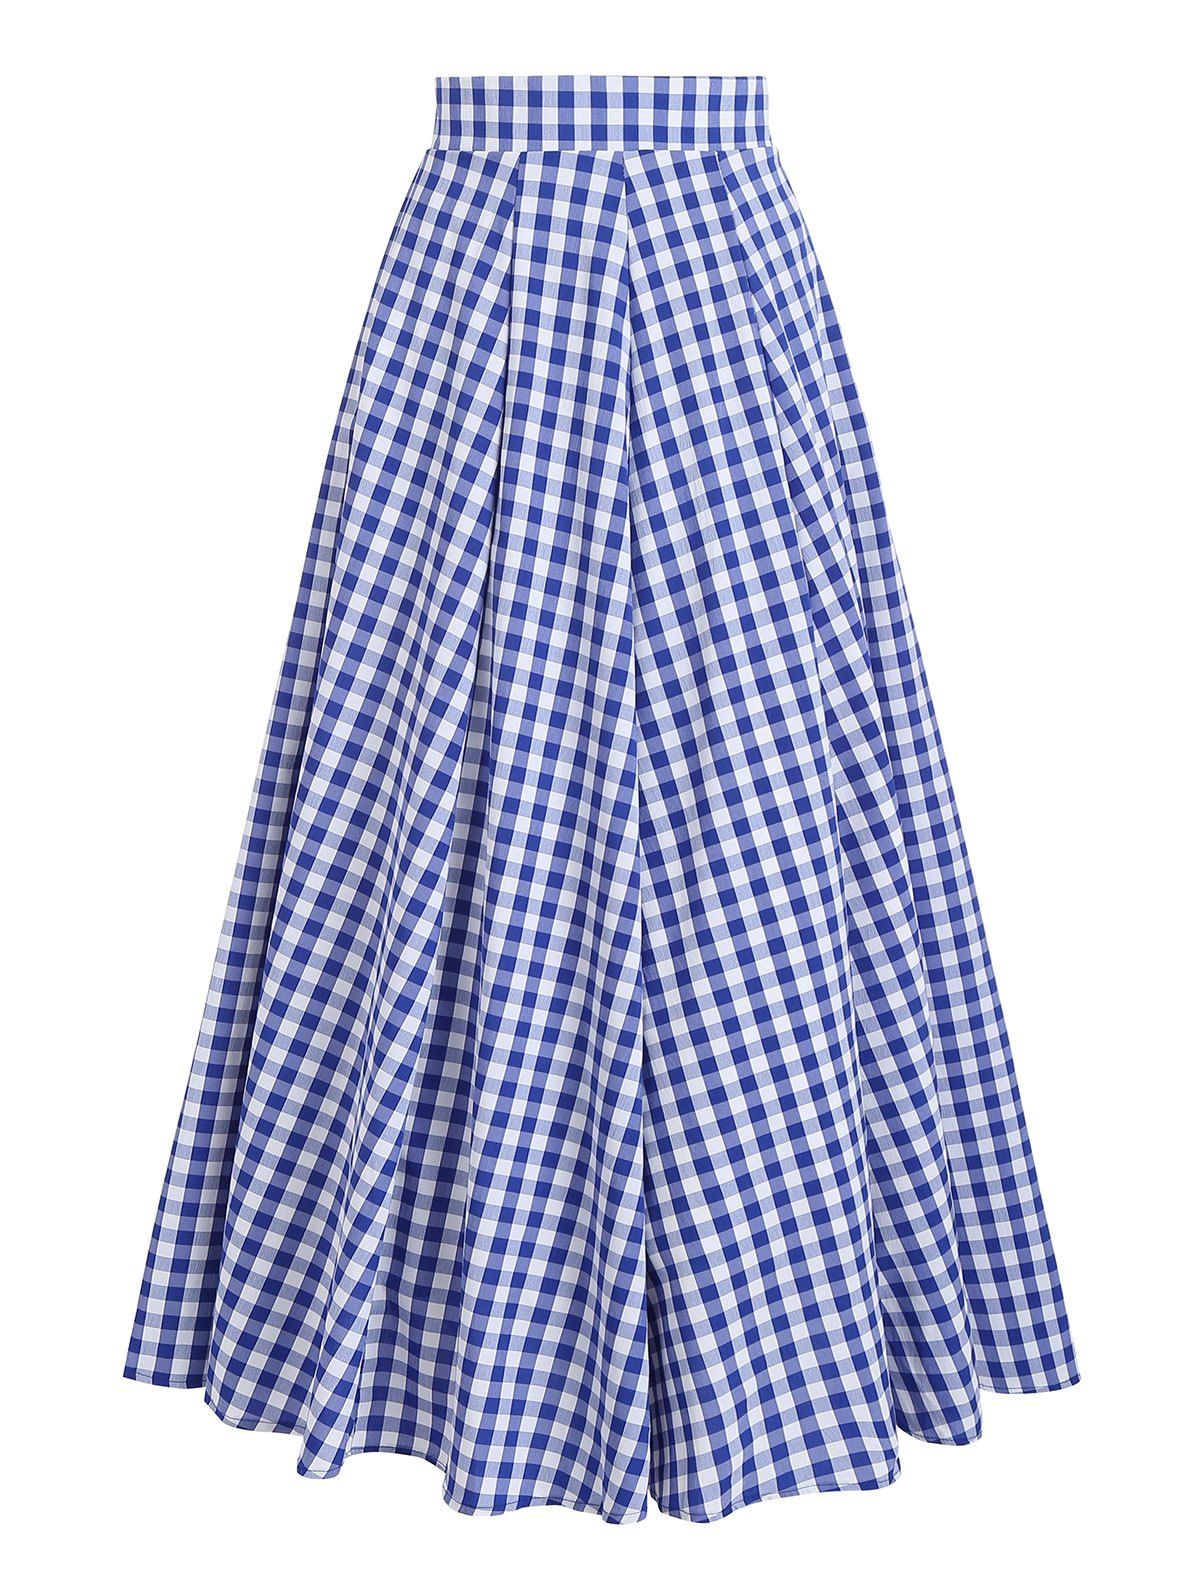 Gingham Print Maxi Skirt - BLUE 2XL